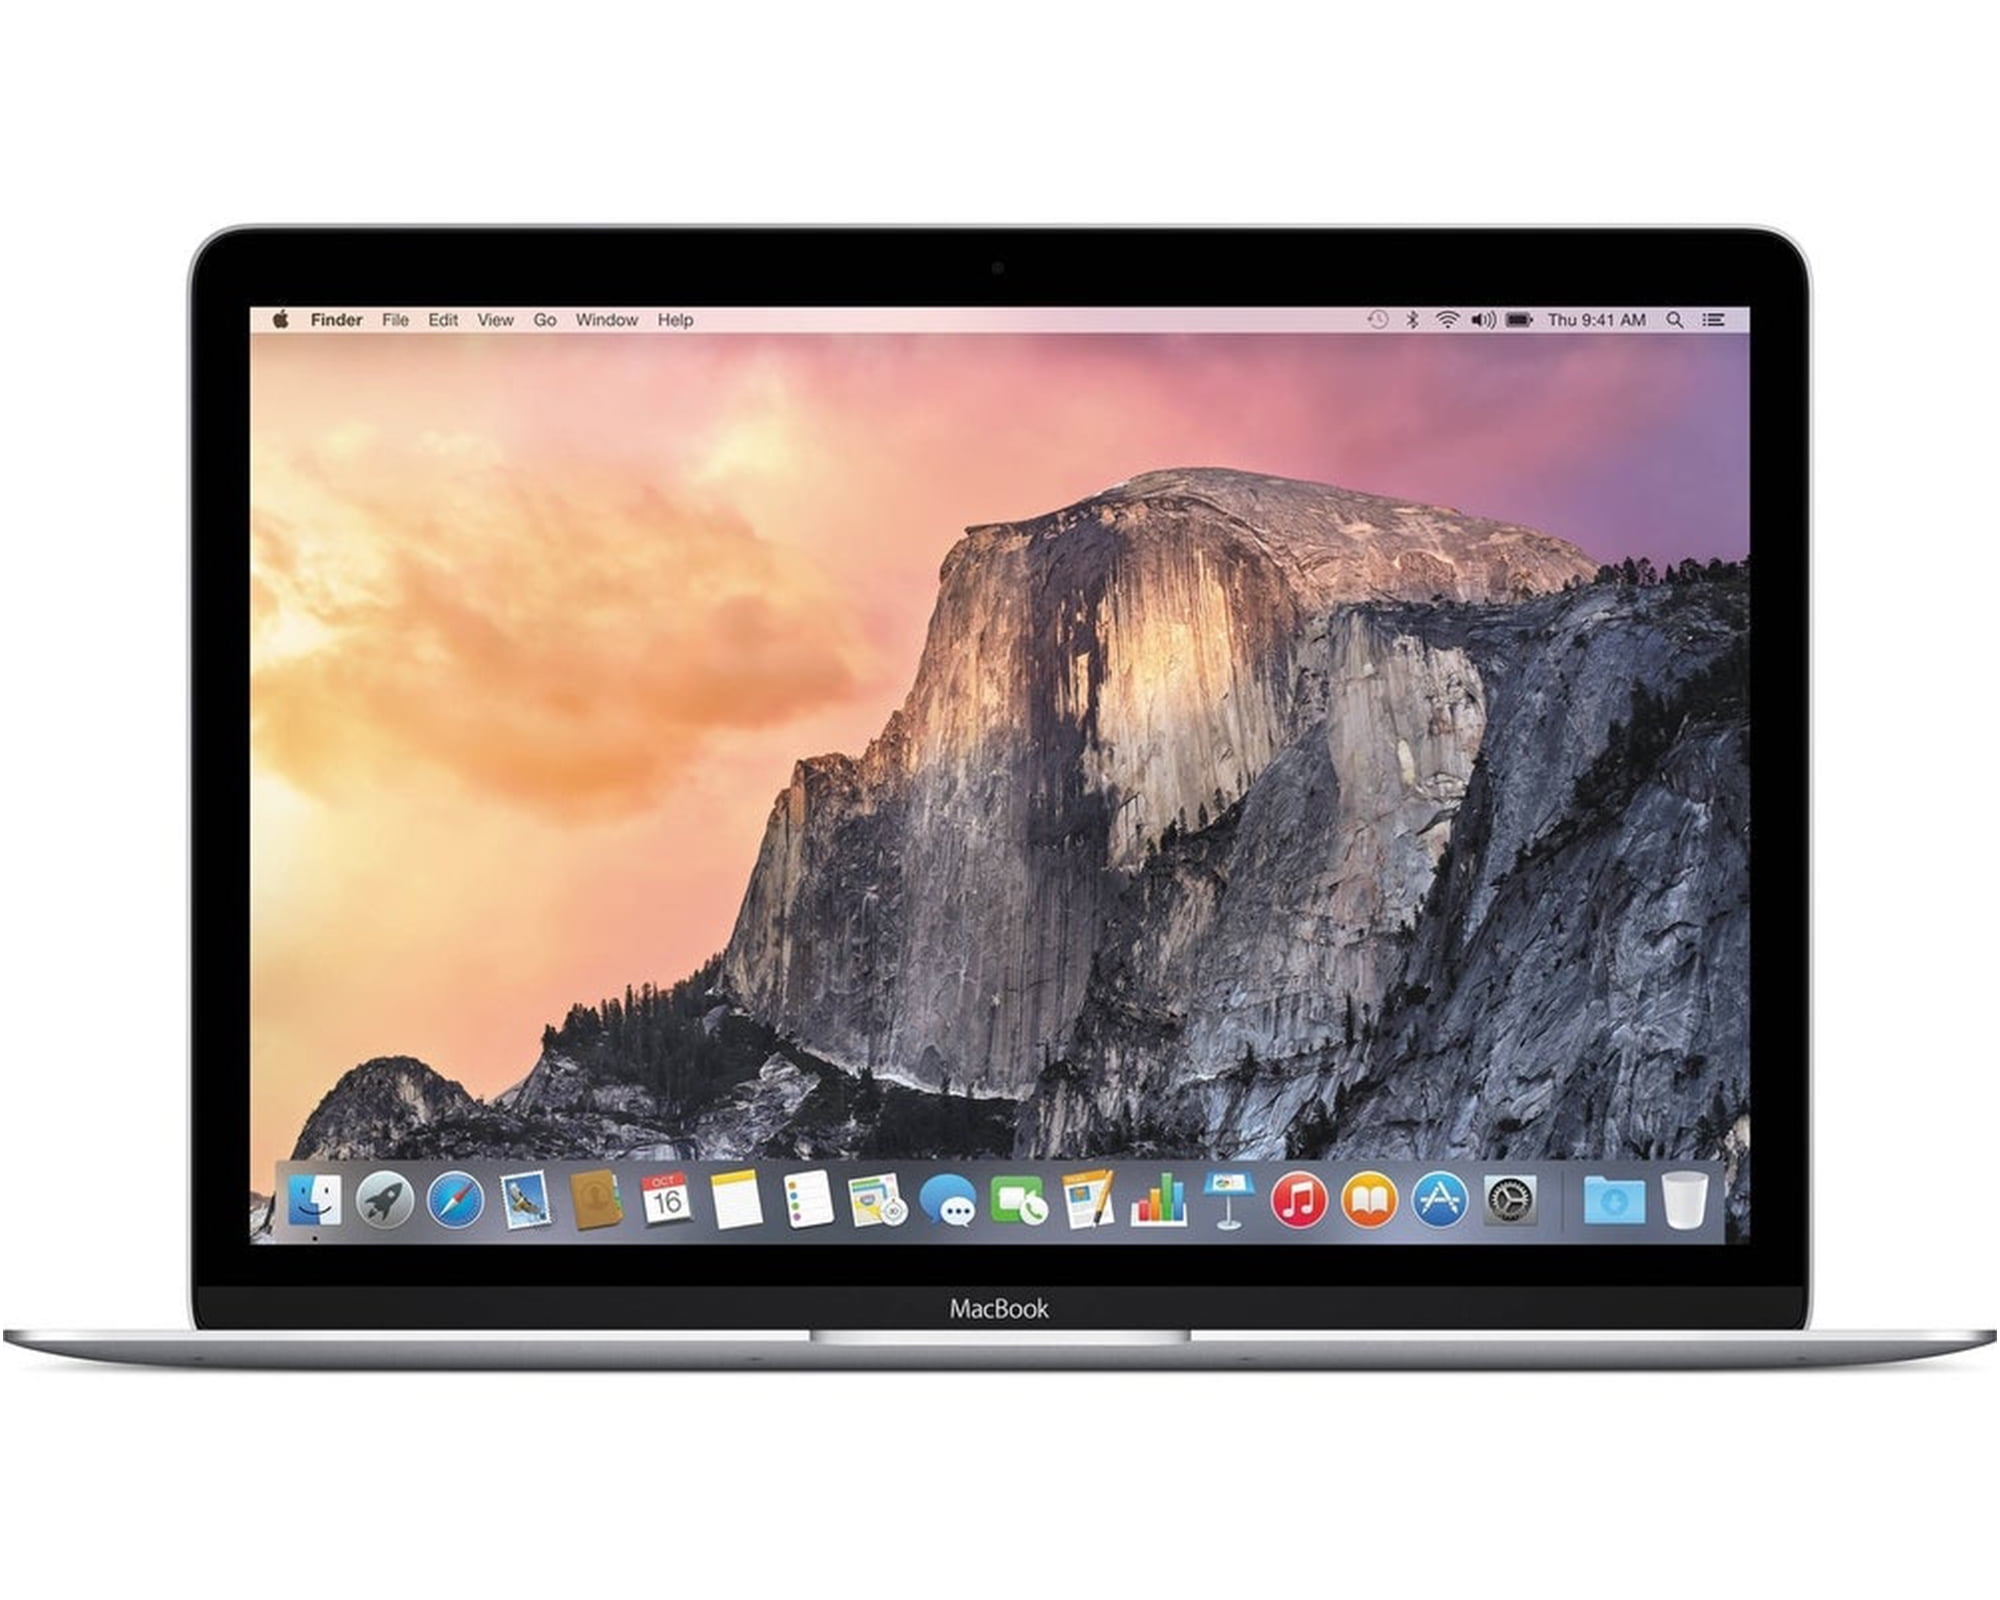 Restored Apple Macbook (MLHA2LL/A) 12-inch Retina Display Intel Core m3  256GB - Silver (Early 2016) (Refurbished)